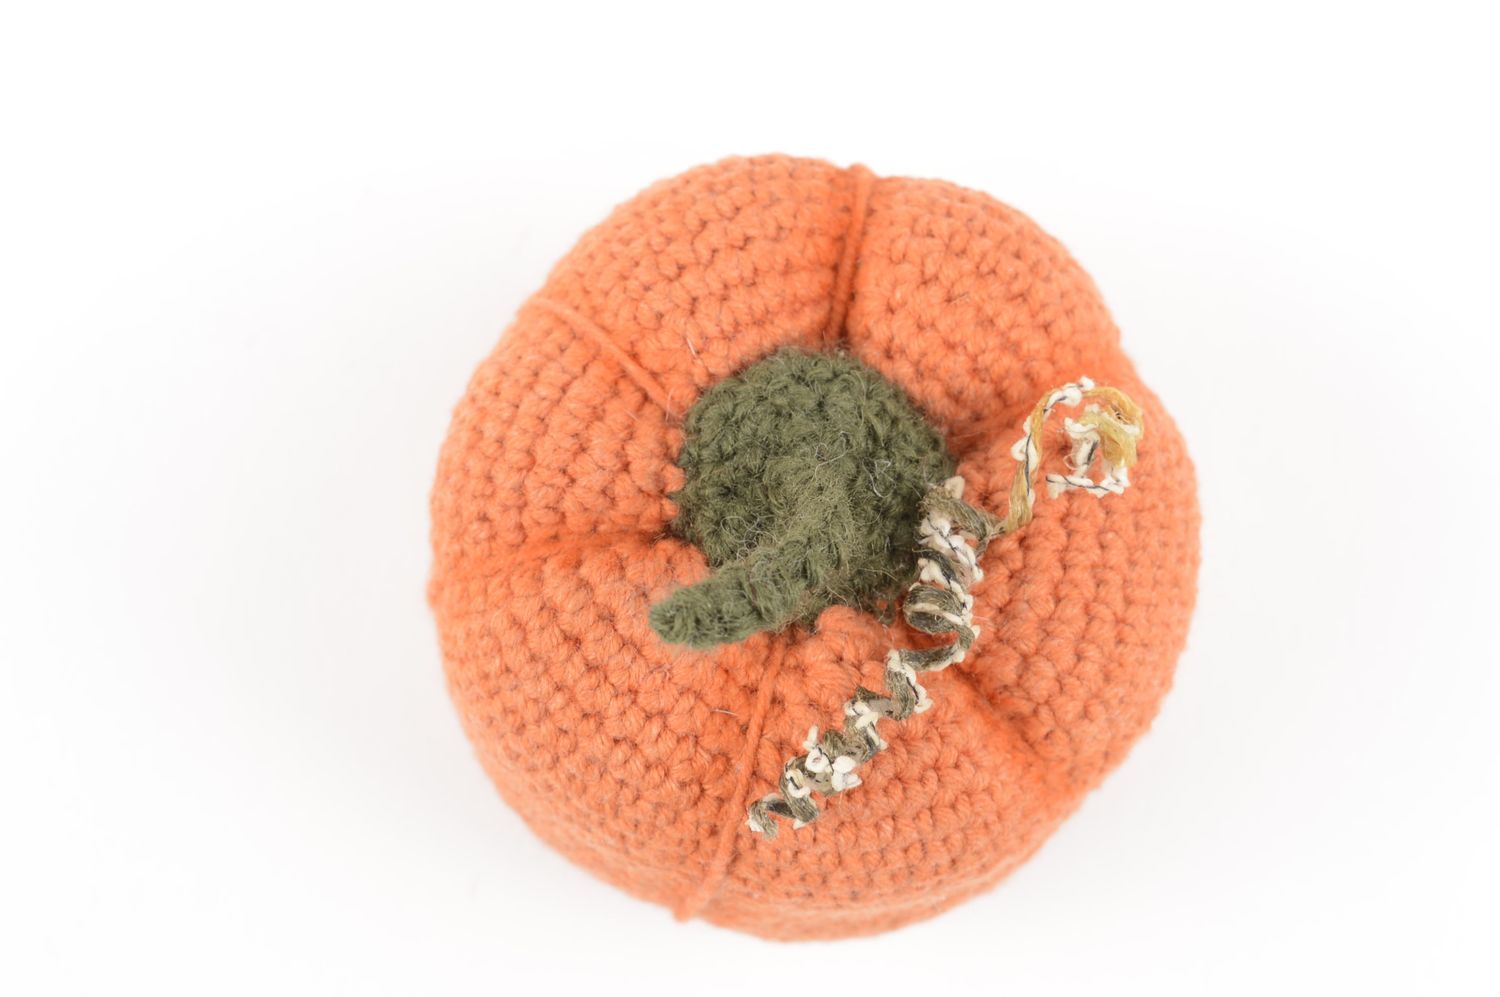 Juguete artesanal tejido a crochet peluche para niños regalo original  foto 4